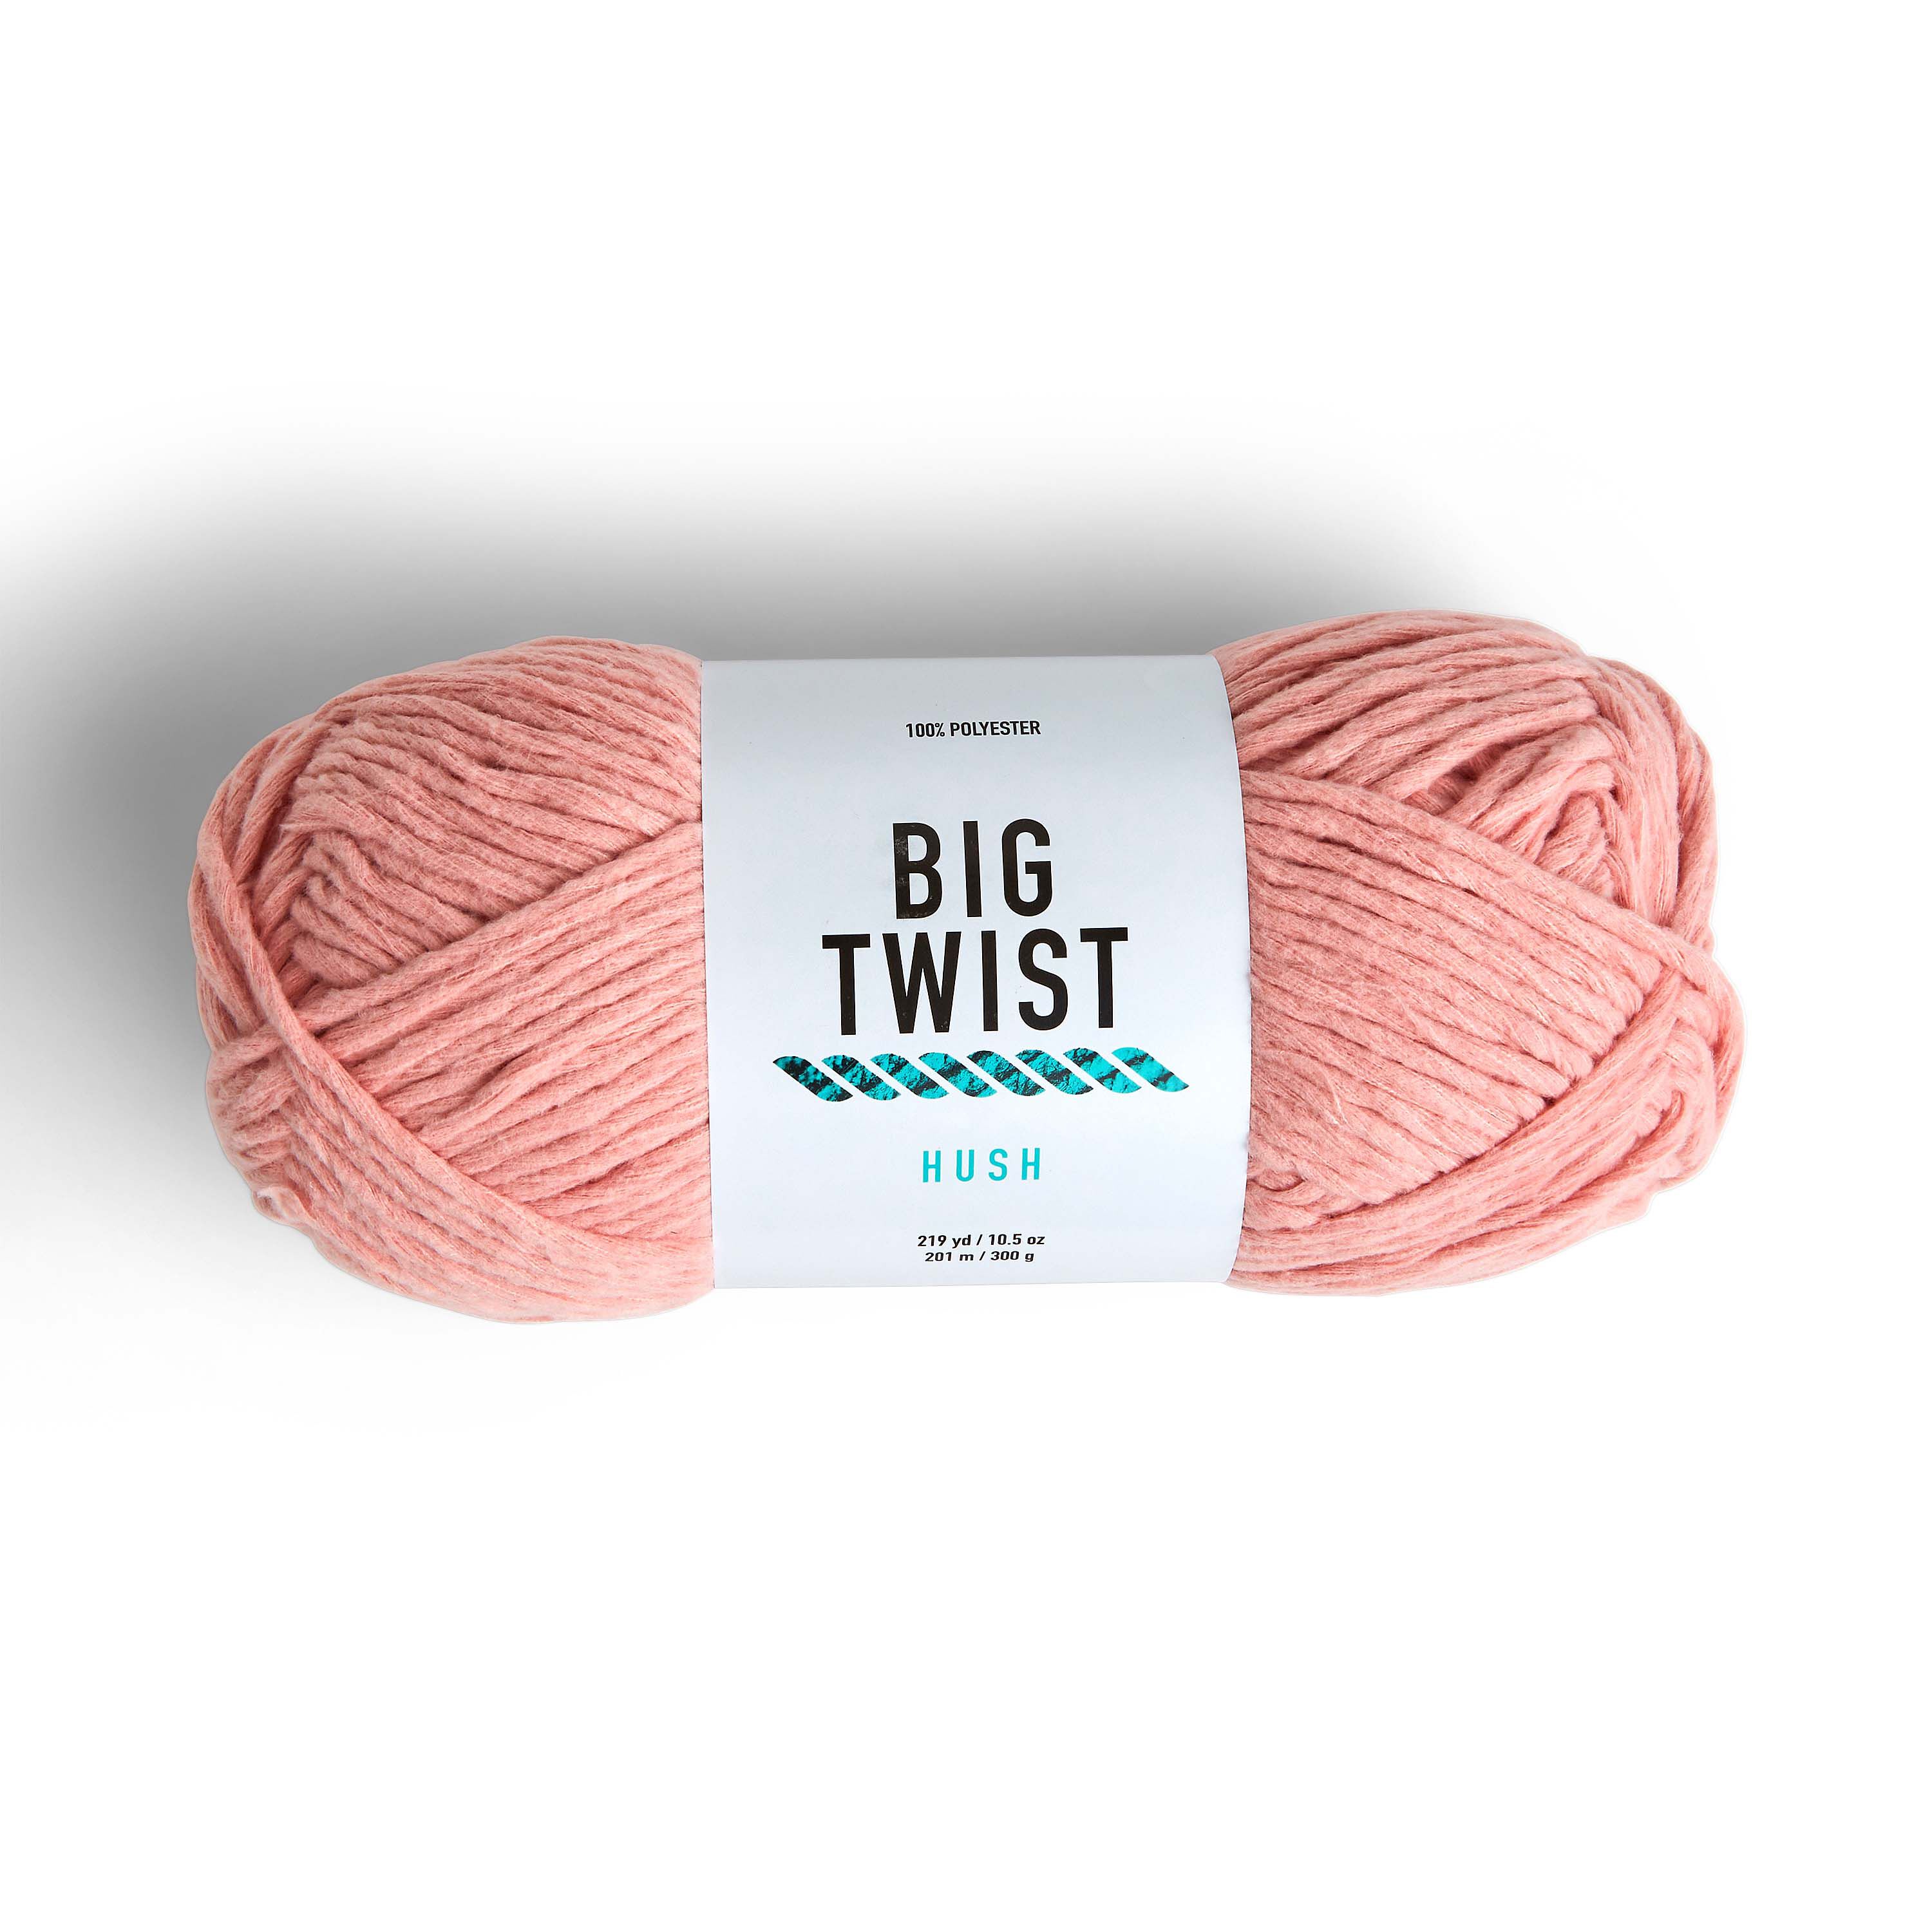 Hush 217yds Bulky Polyester Yarn by Big Twist